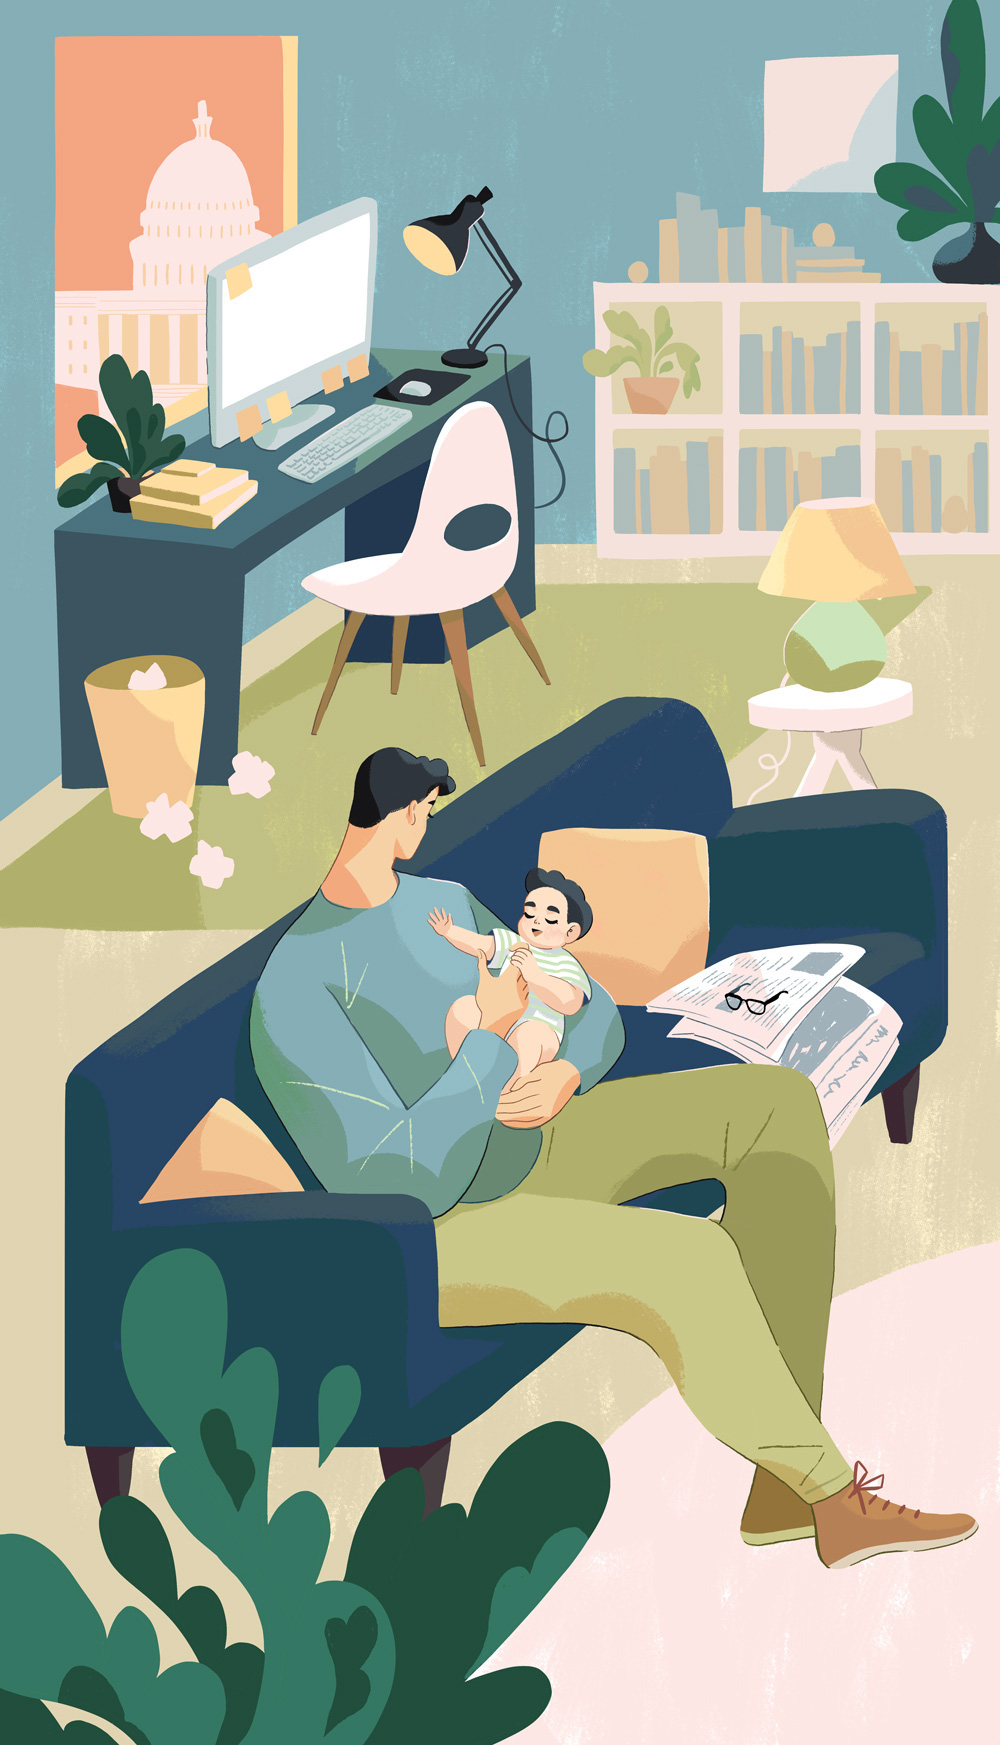 parent child parenting Washington Post Reading life work balance